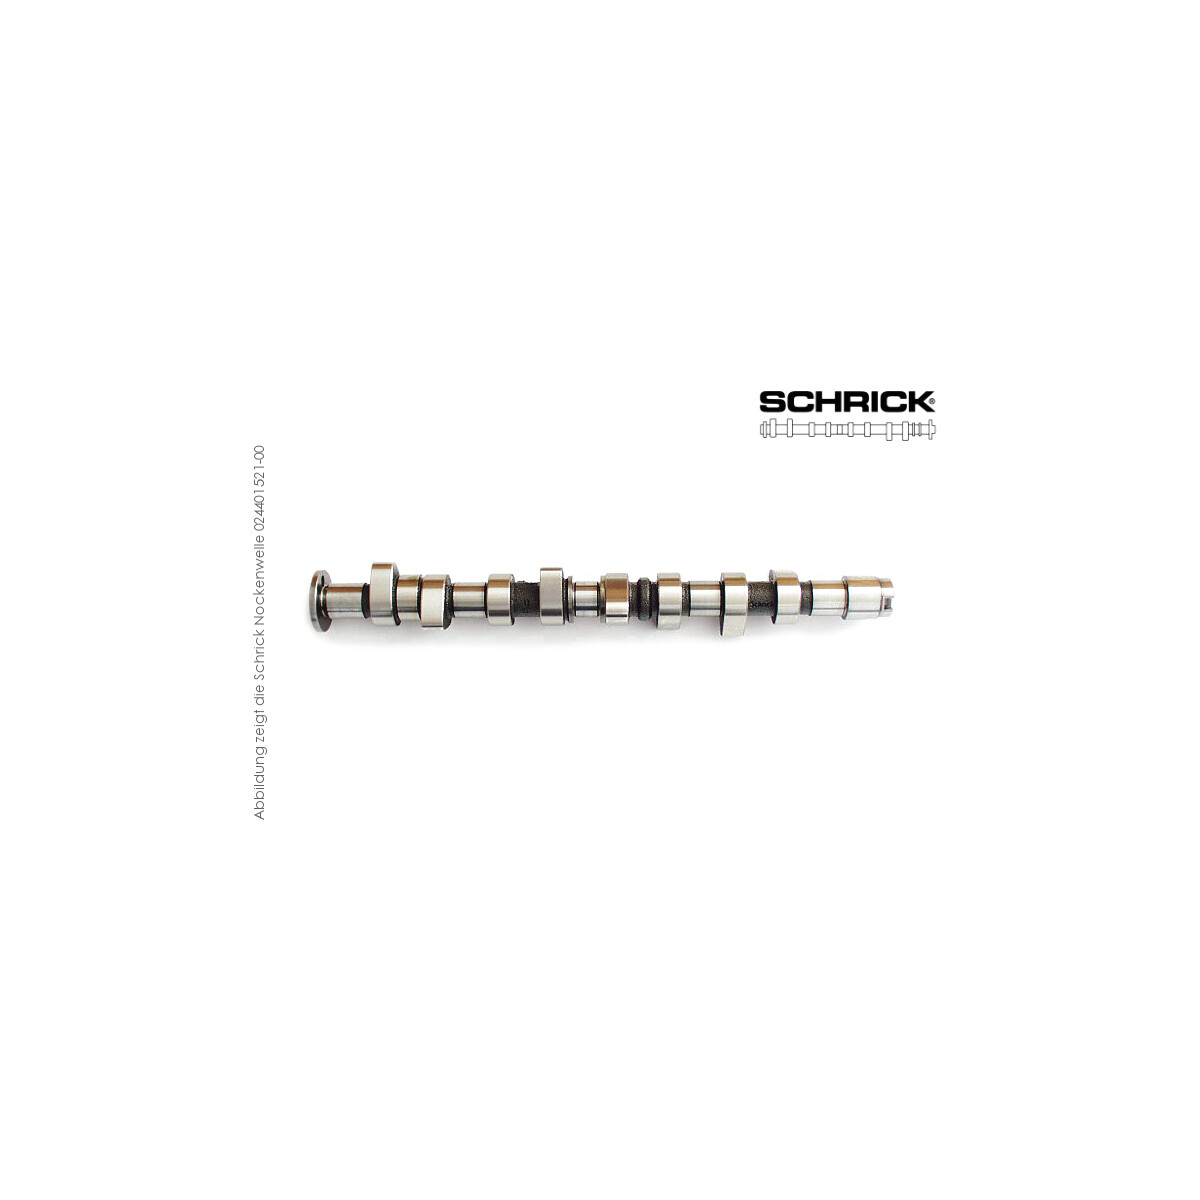 Schrick Nockenwelle für Audi 80, 90 | 1,8-2,0L 16V 4-Zyl. , 16V | 276° Einlassnockenwelle (Schrick 0220E1761-01)